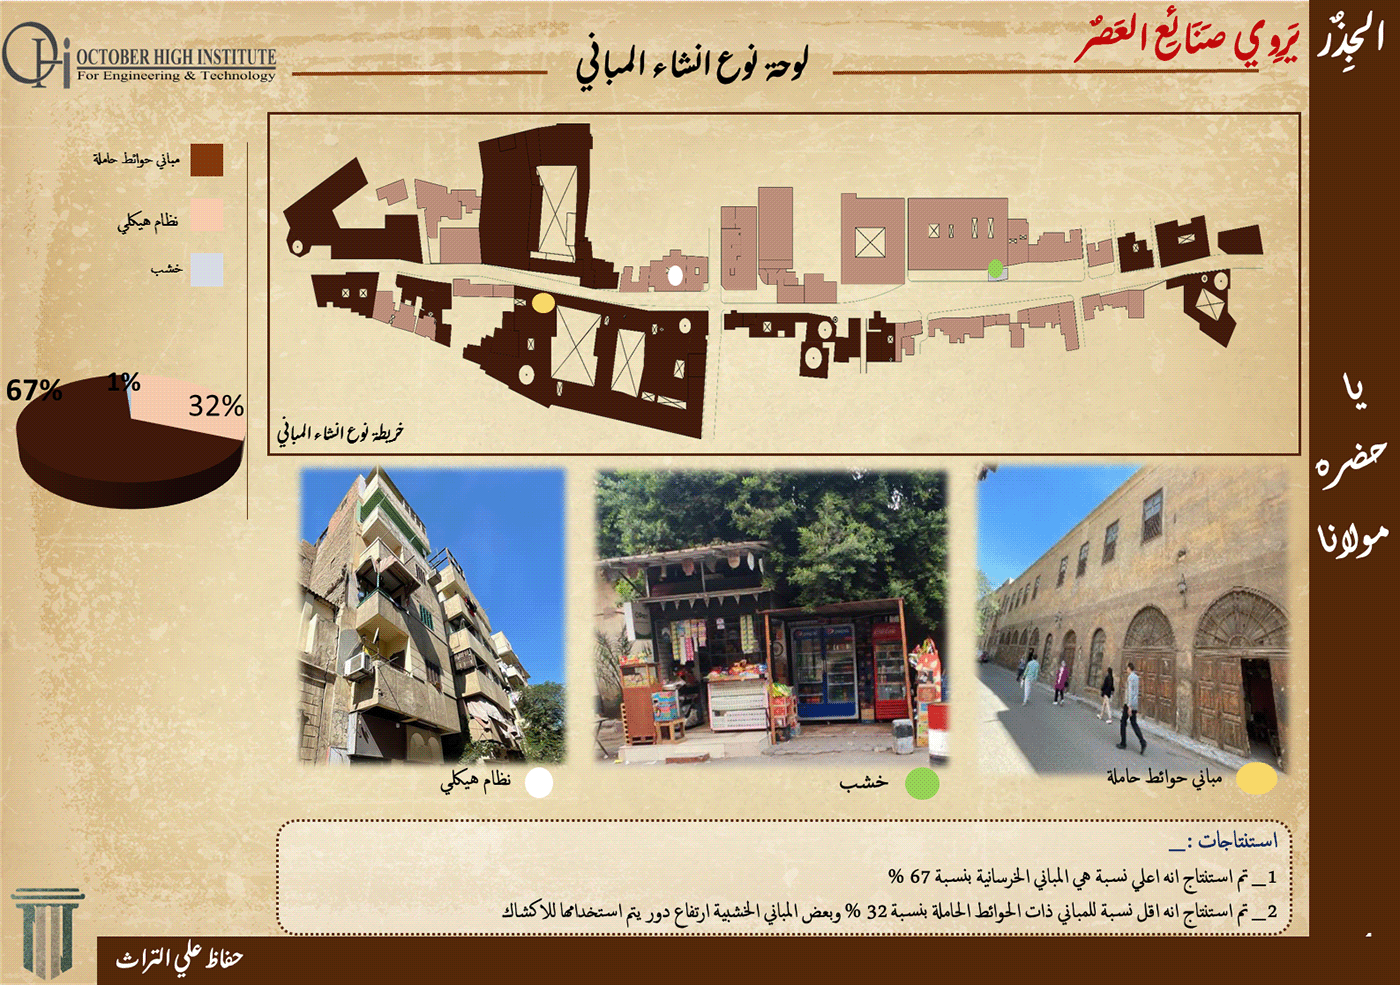 cairo heritage history culture magazine architecture